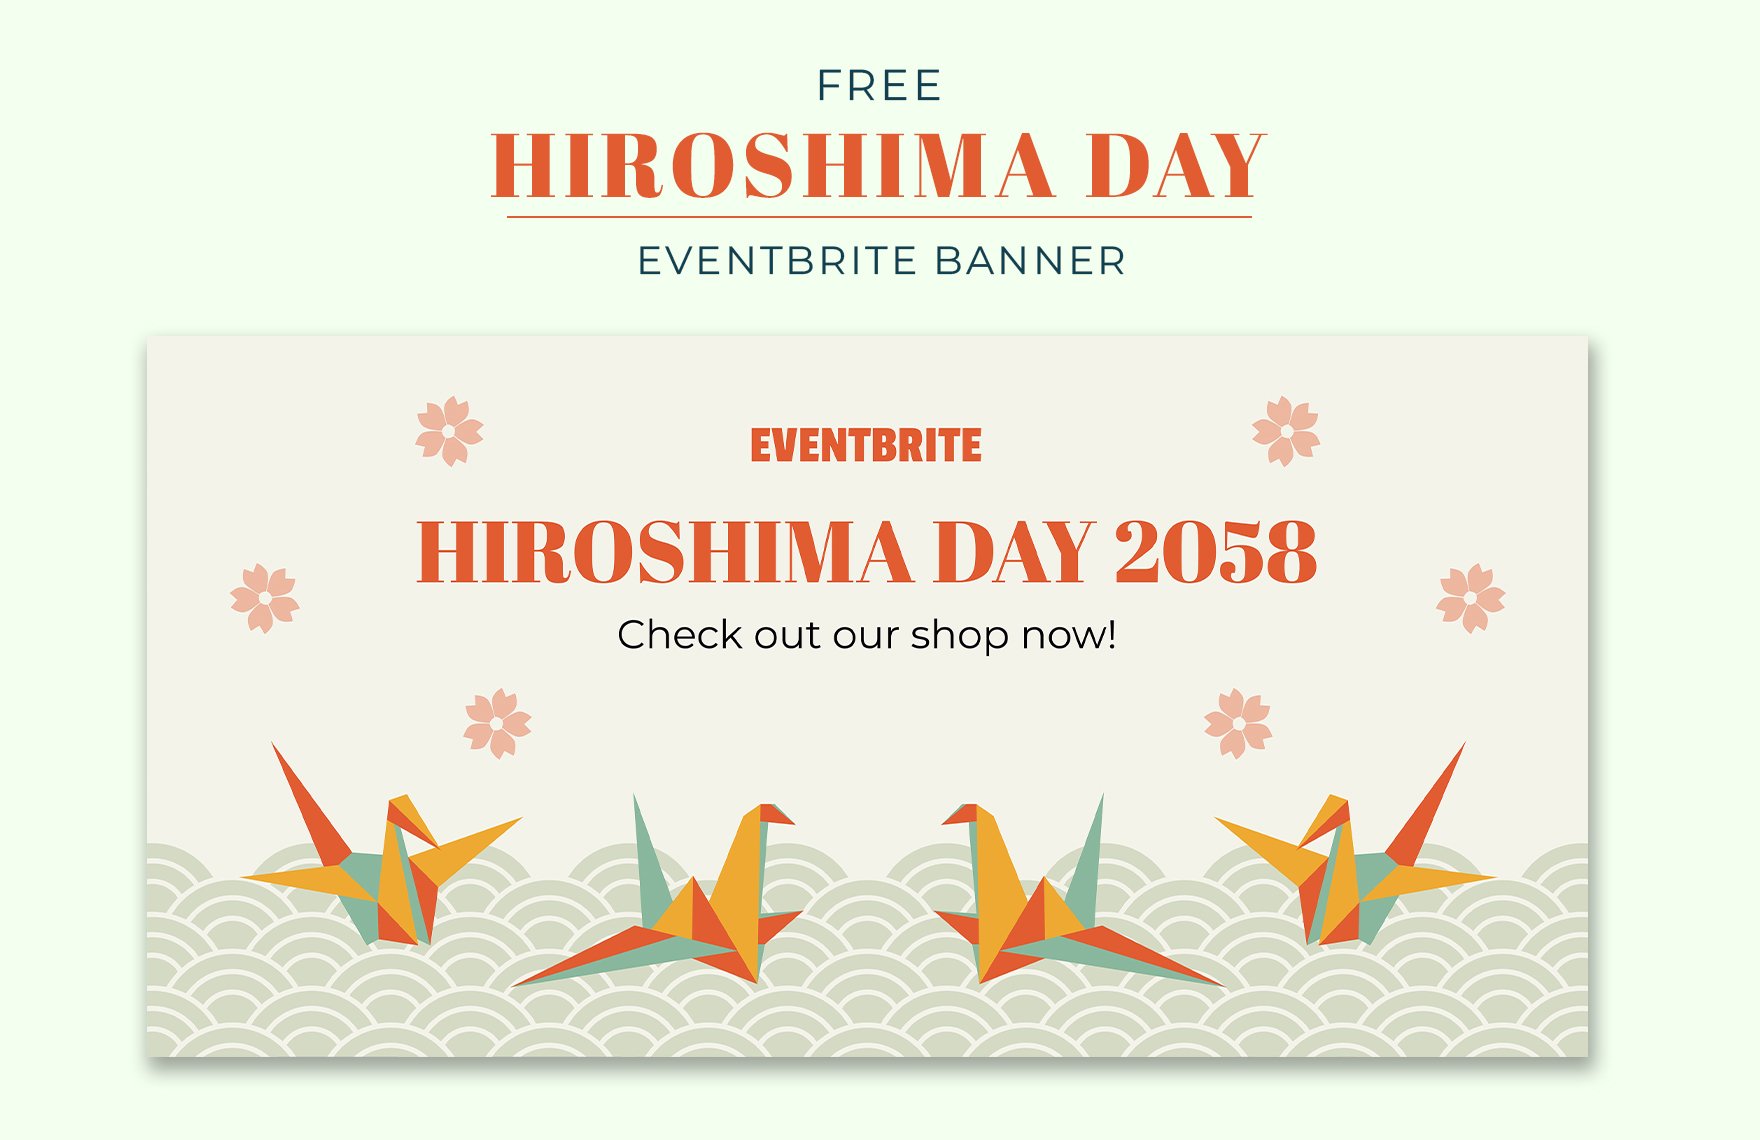 Hiroshima Day Eventbrite Banner in PDF, Illustrator, SVG, JPG